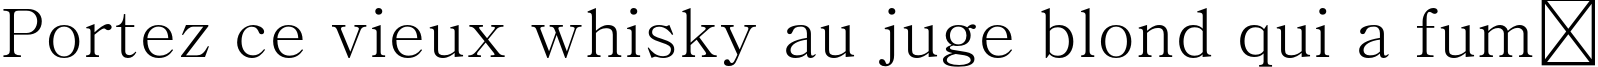 Пример написания шрифтом Adobe Myungjo Std M текста на французском